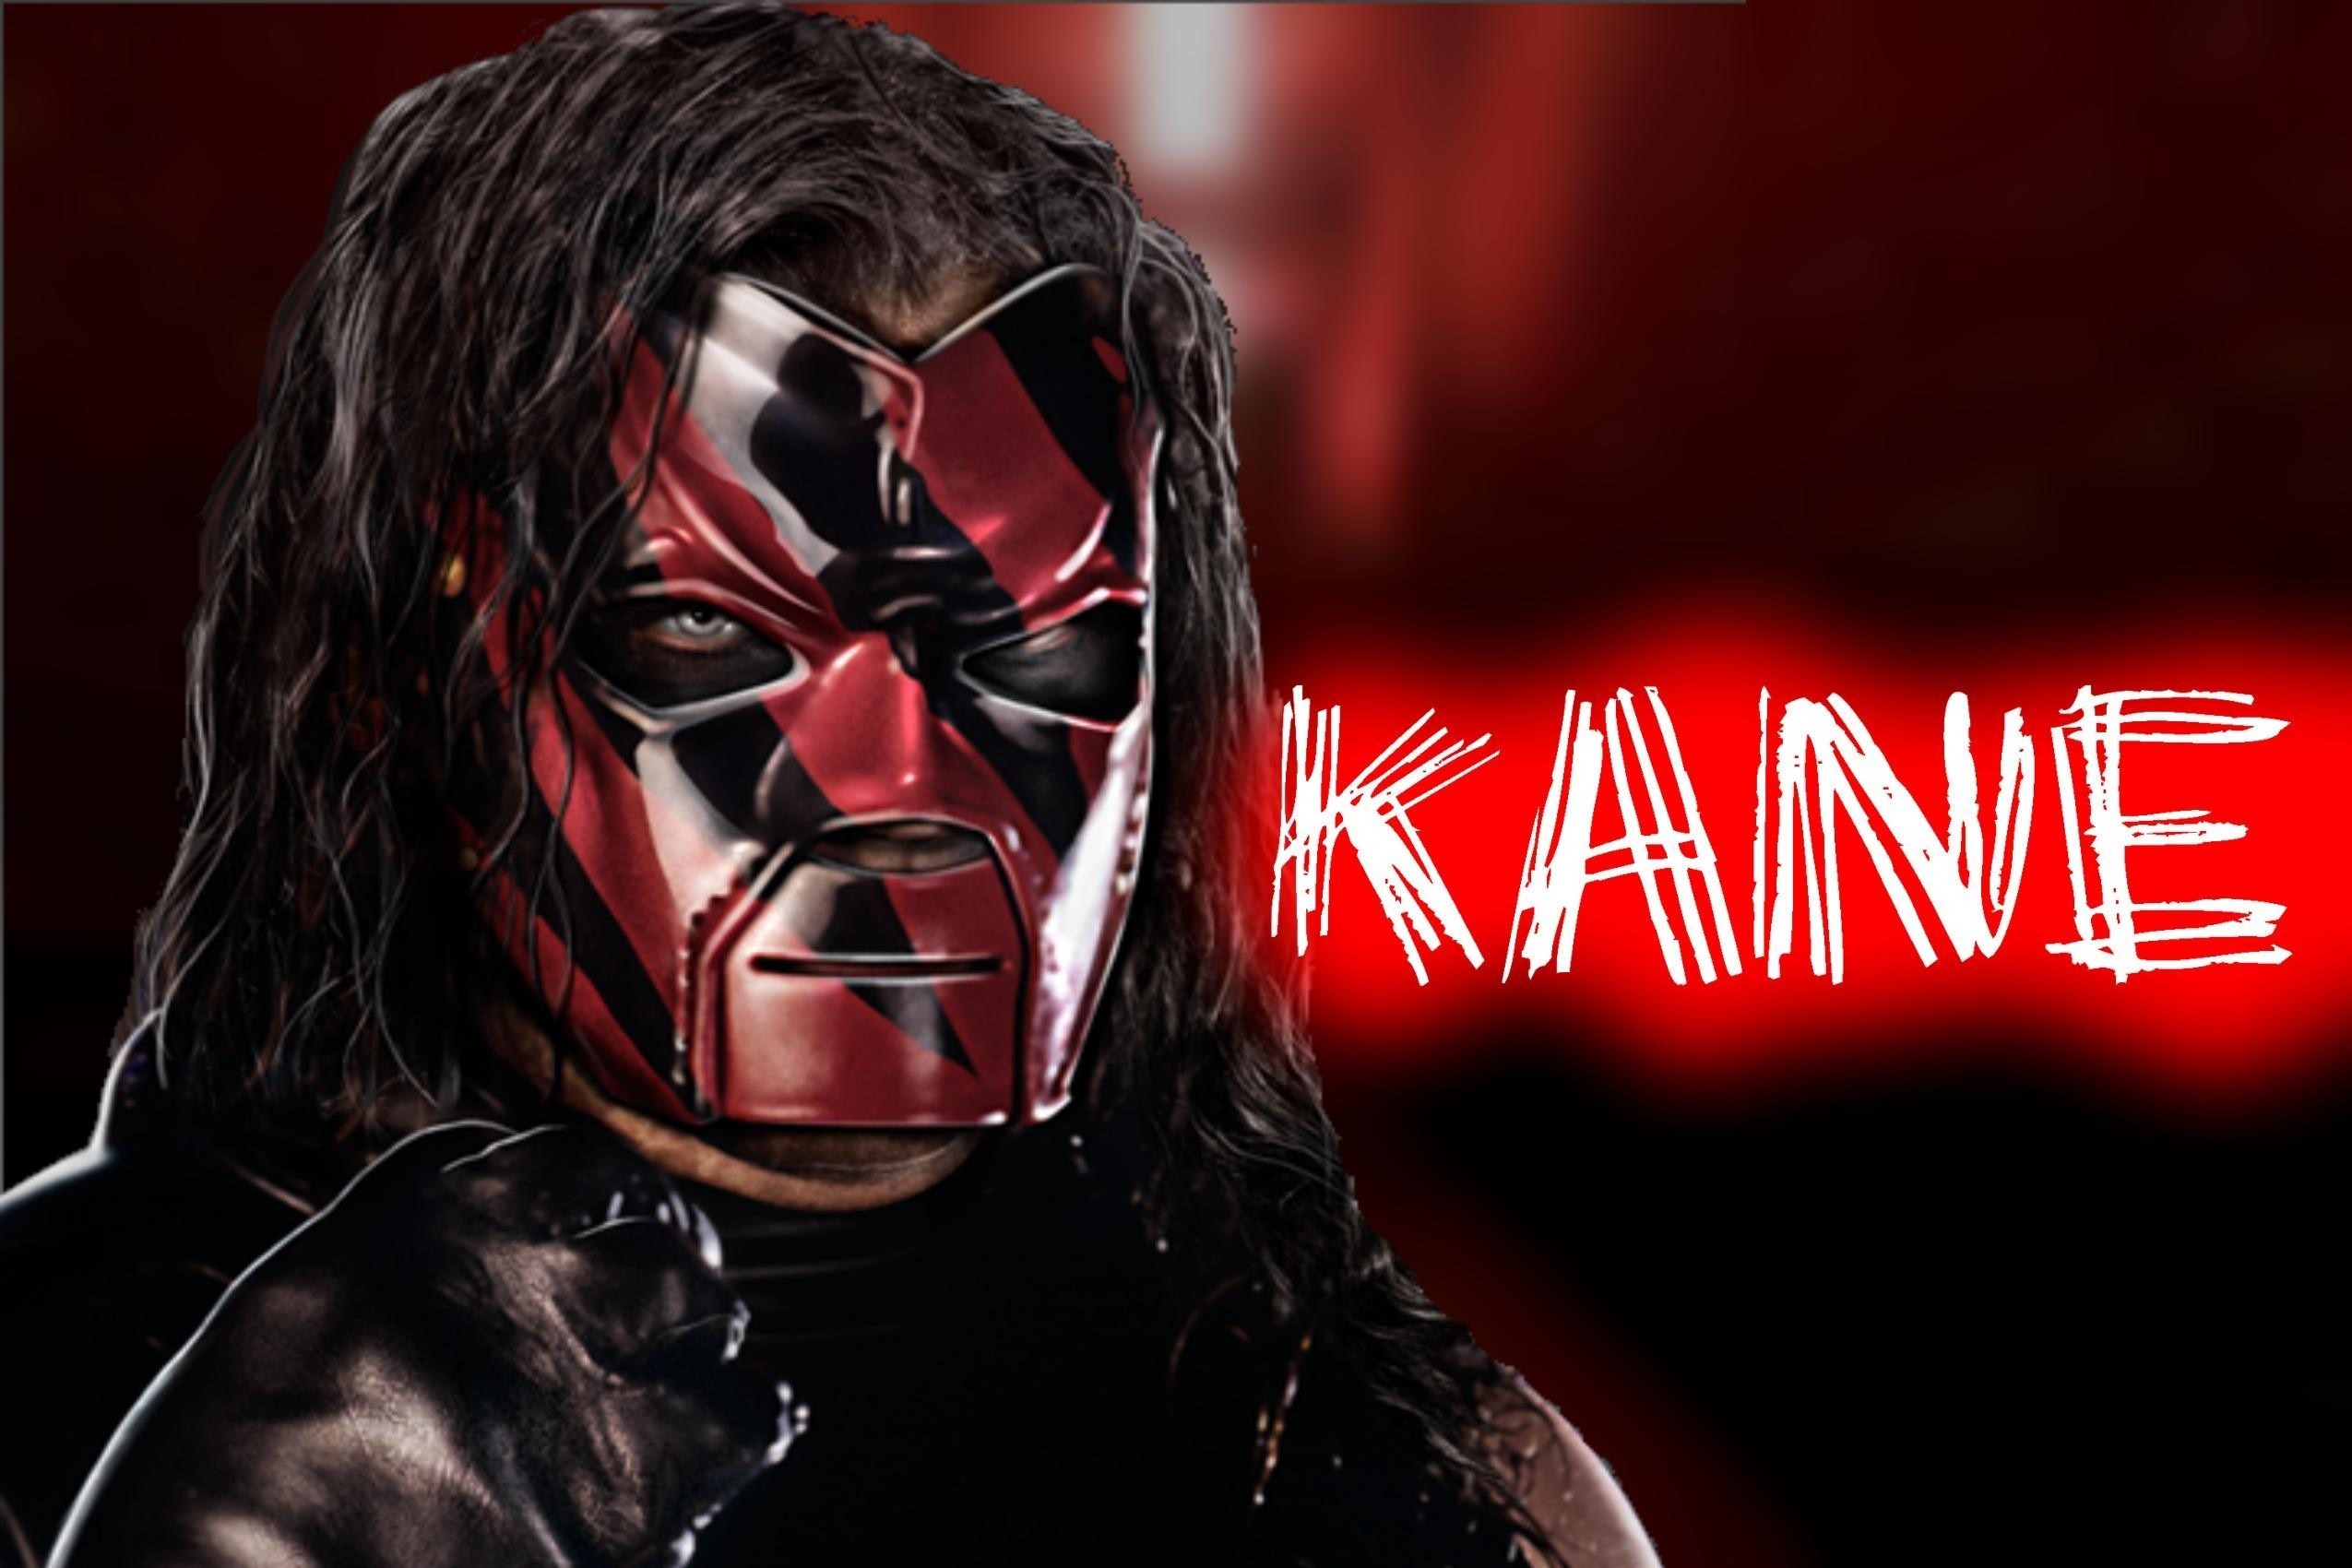 Kane Wrestler Quotes. QuotesGram